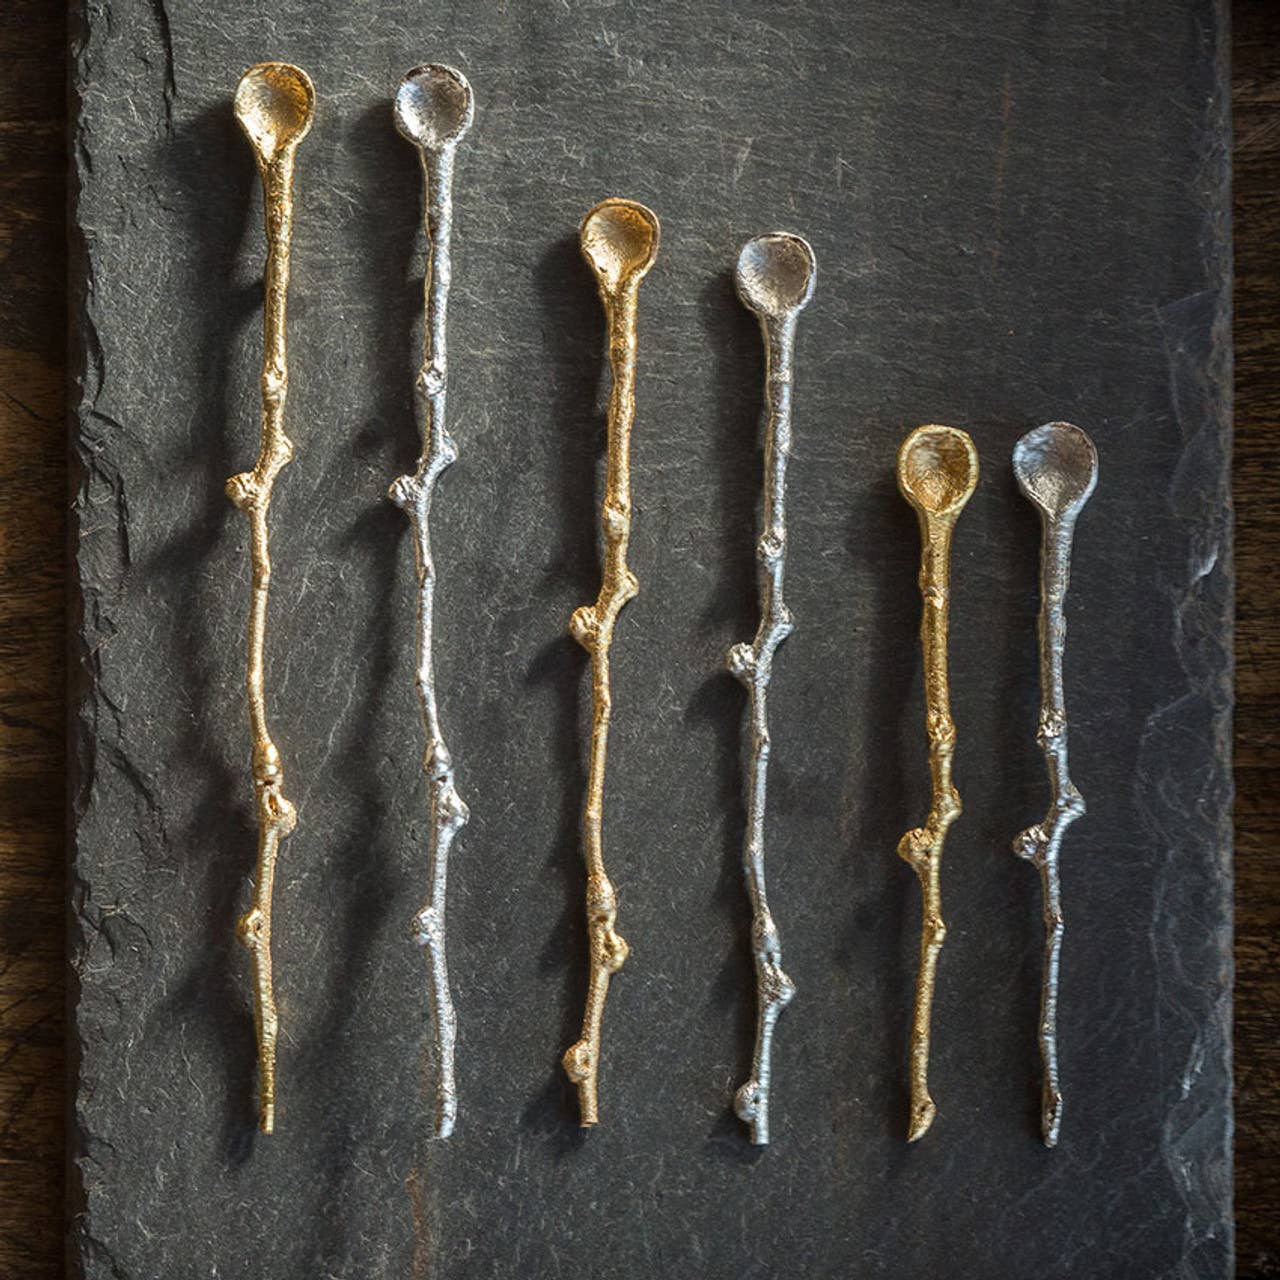 Gold Decorative Spoon: Large